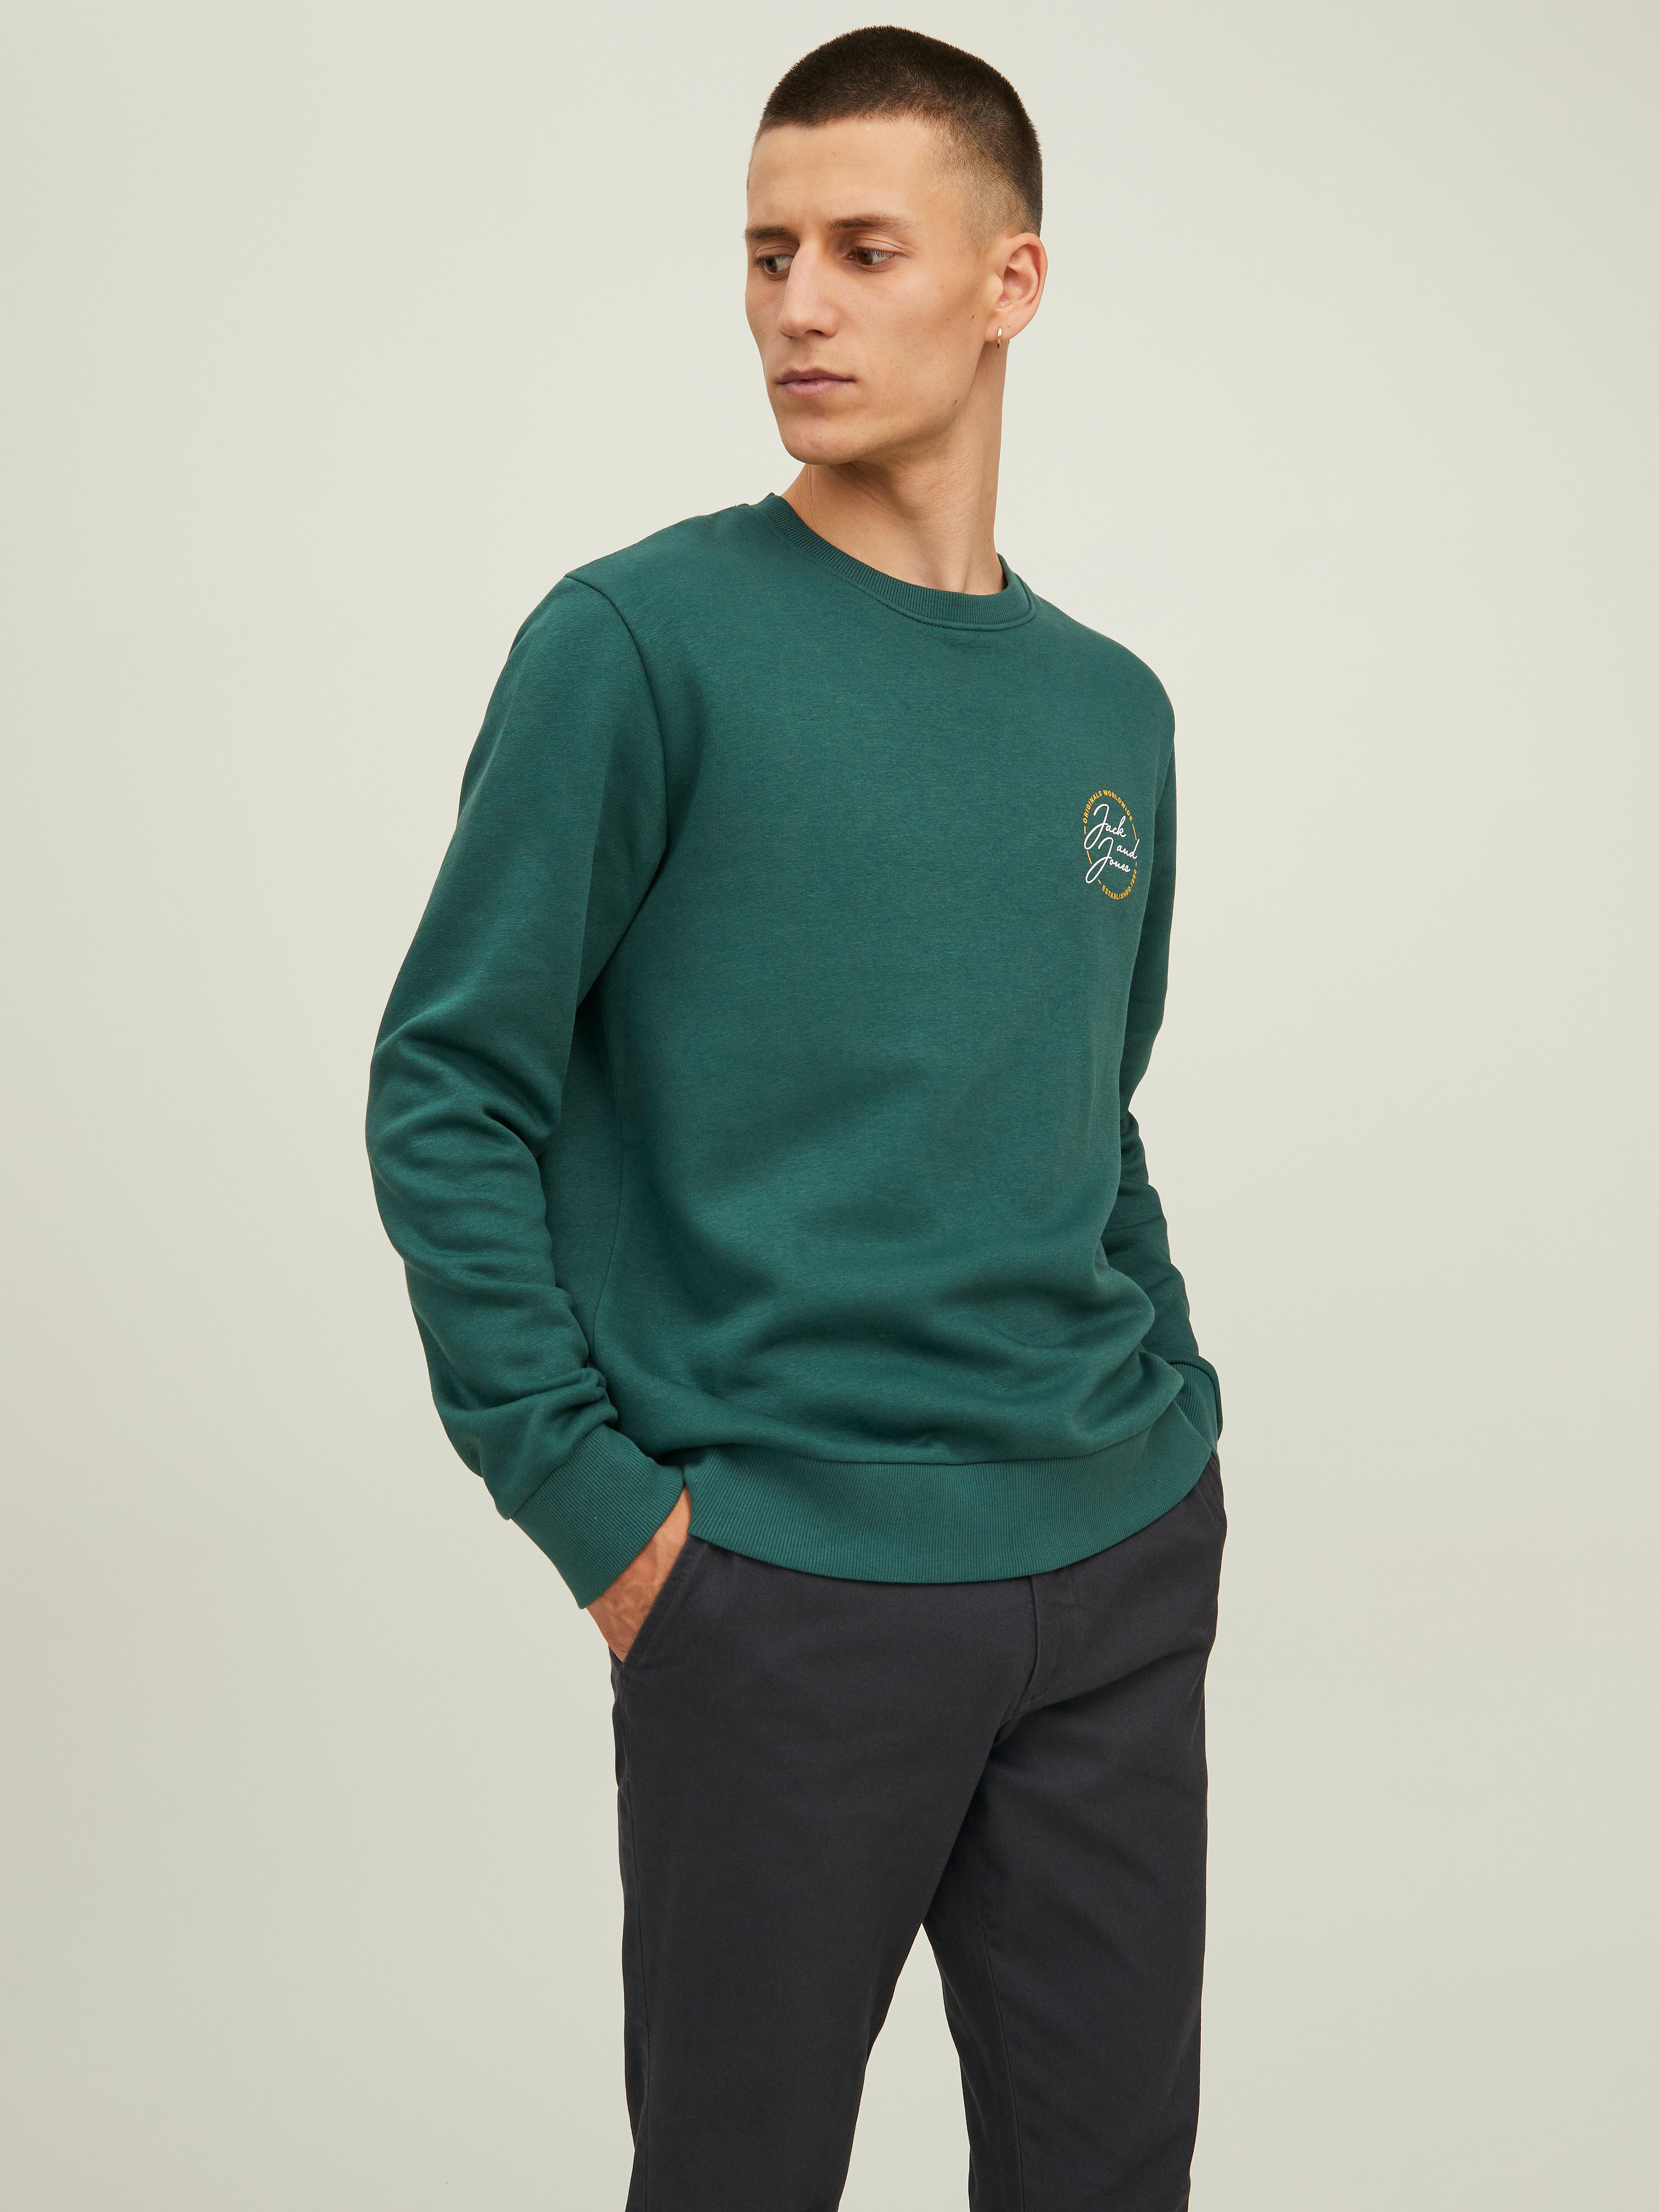 discount 56% Jack & Jones sweatshirt MEN FASHION Jumpers & Sweatshirts Hoodie Green L 